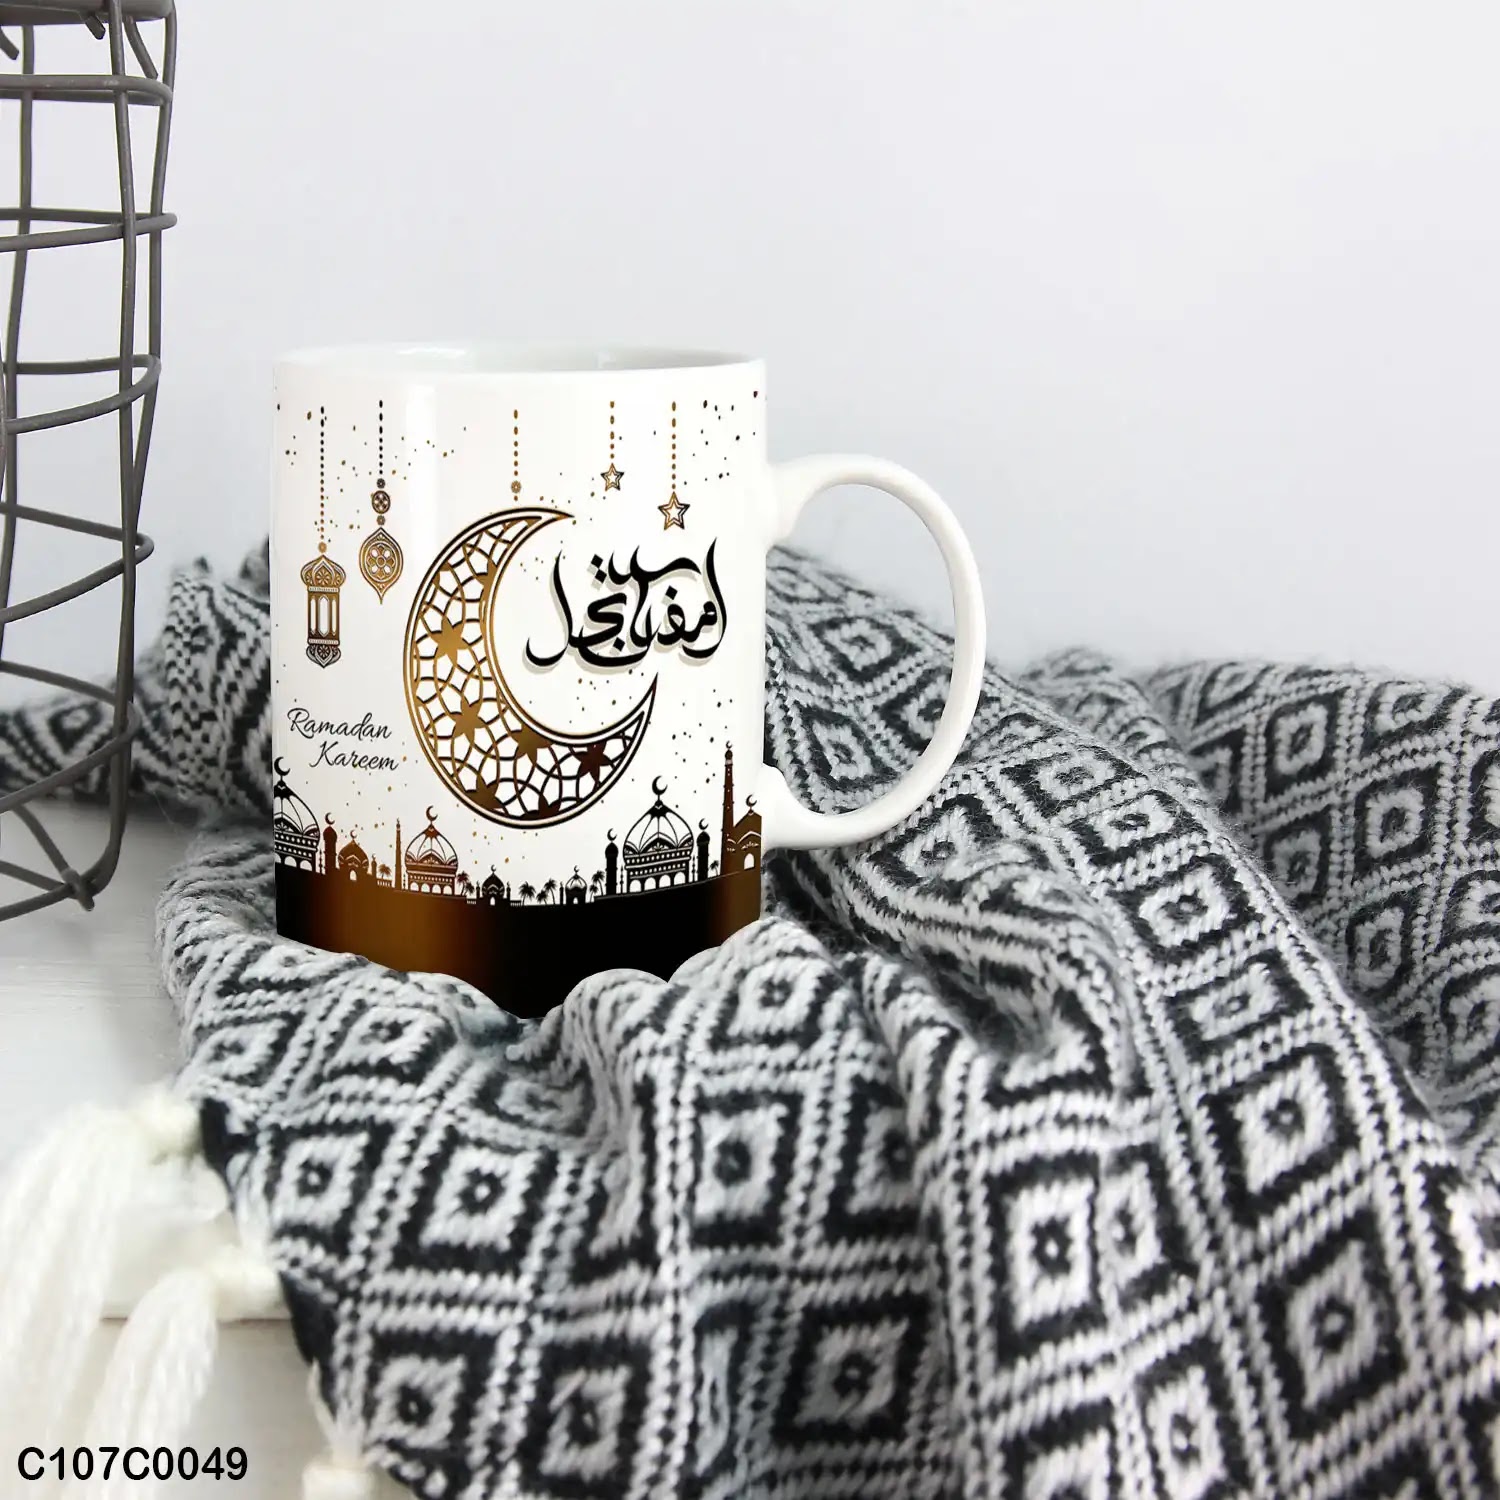 A white and brown mug (cup) printed with "Ramadan Kareem"